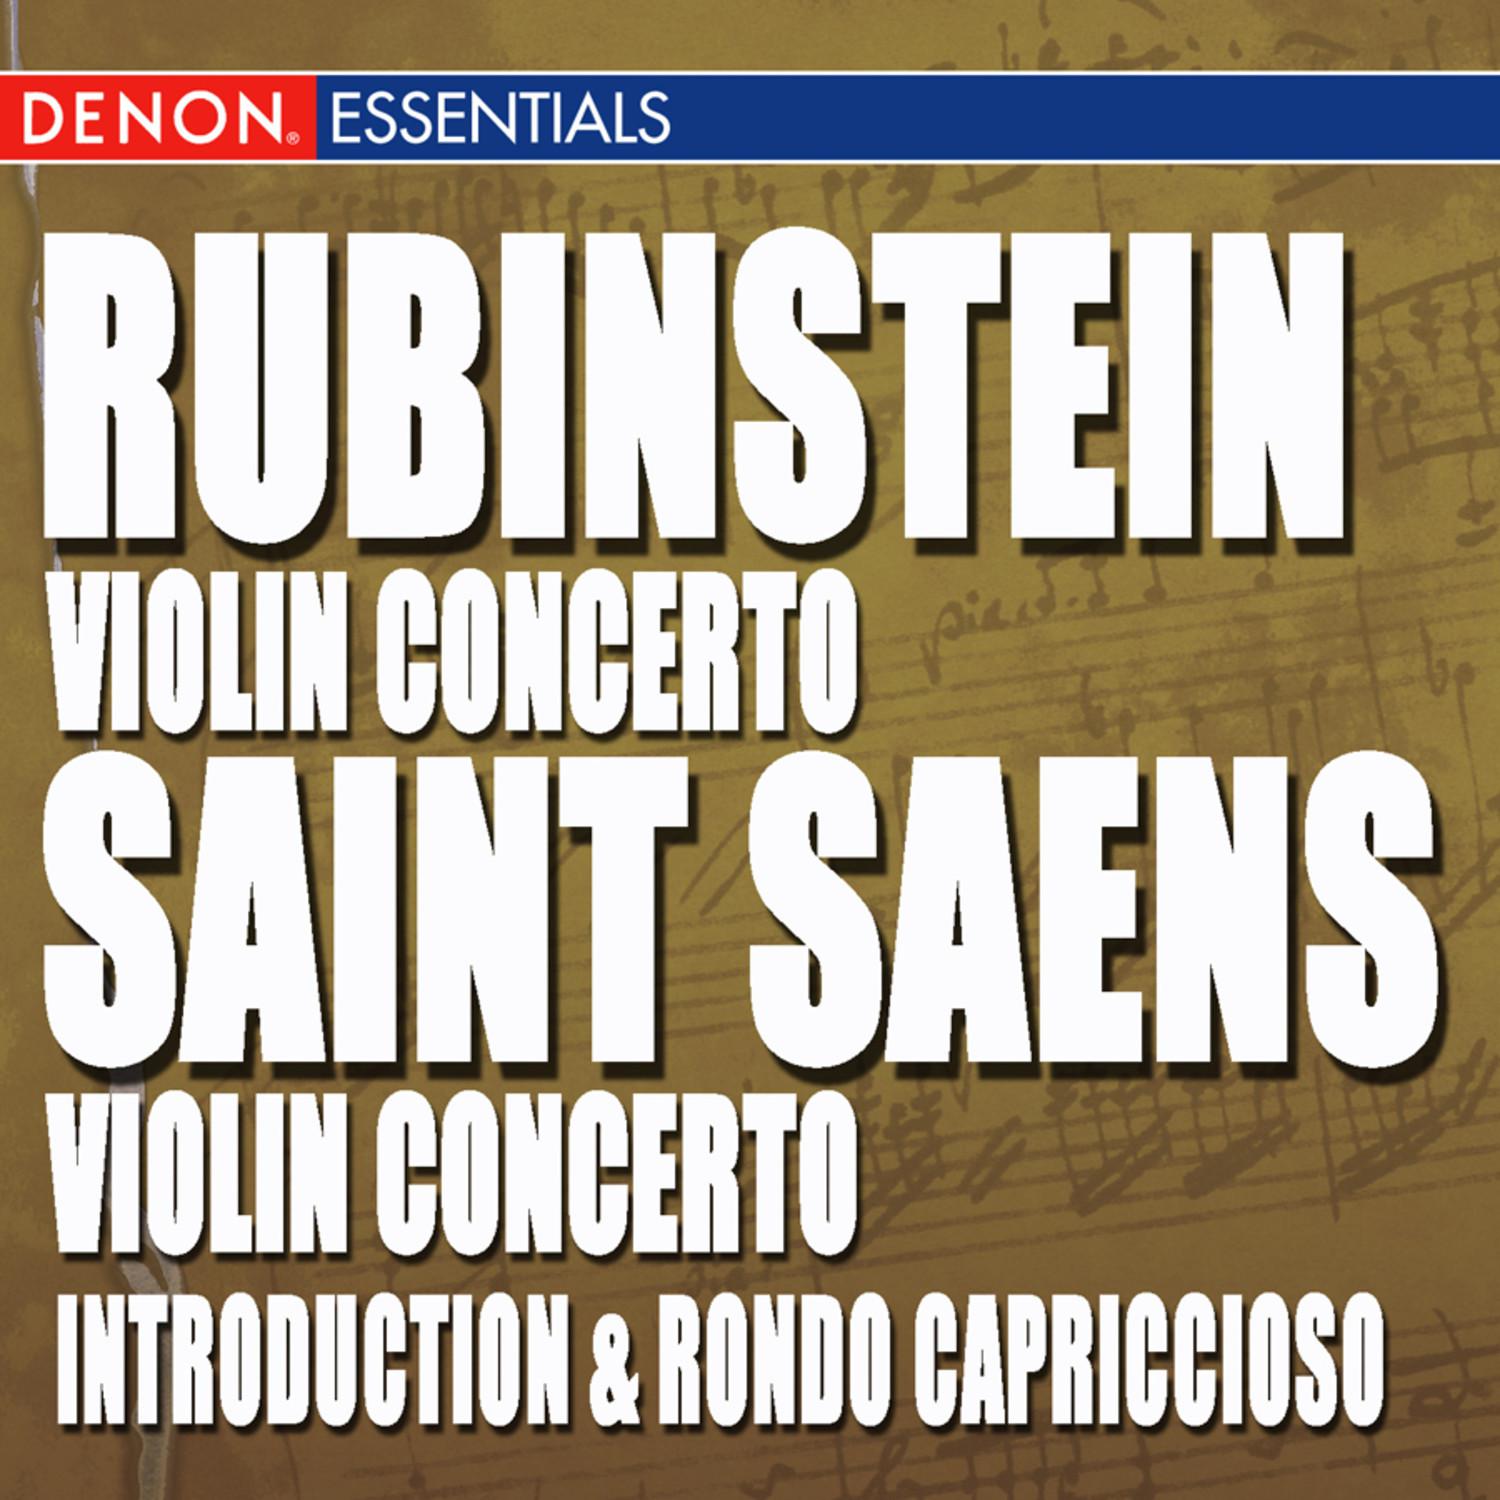 Rubinstein: Violin Concertos - St. Saens: Vioin Concerto 3 & Introduction and Rondo Capriccioso